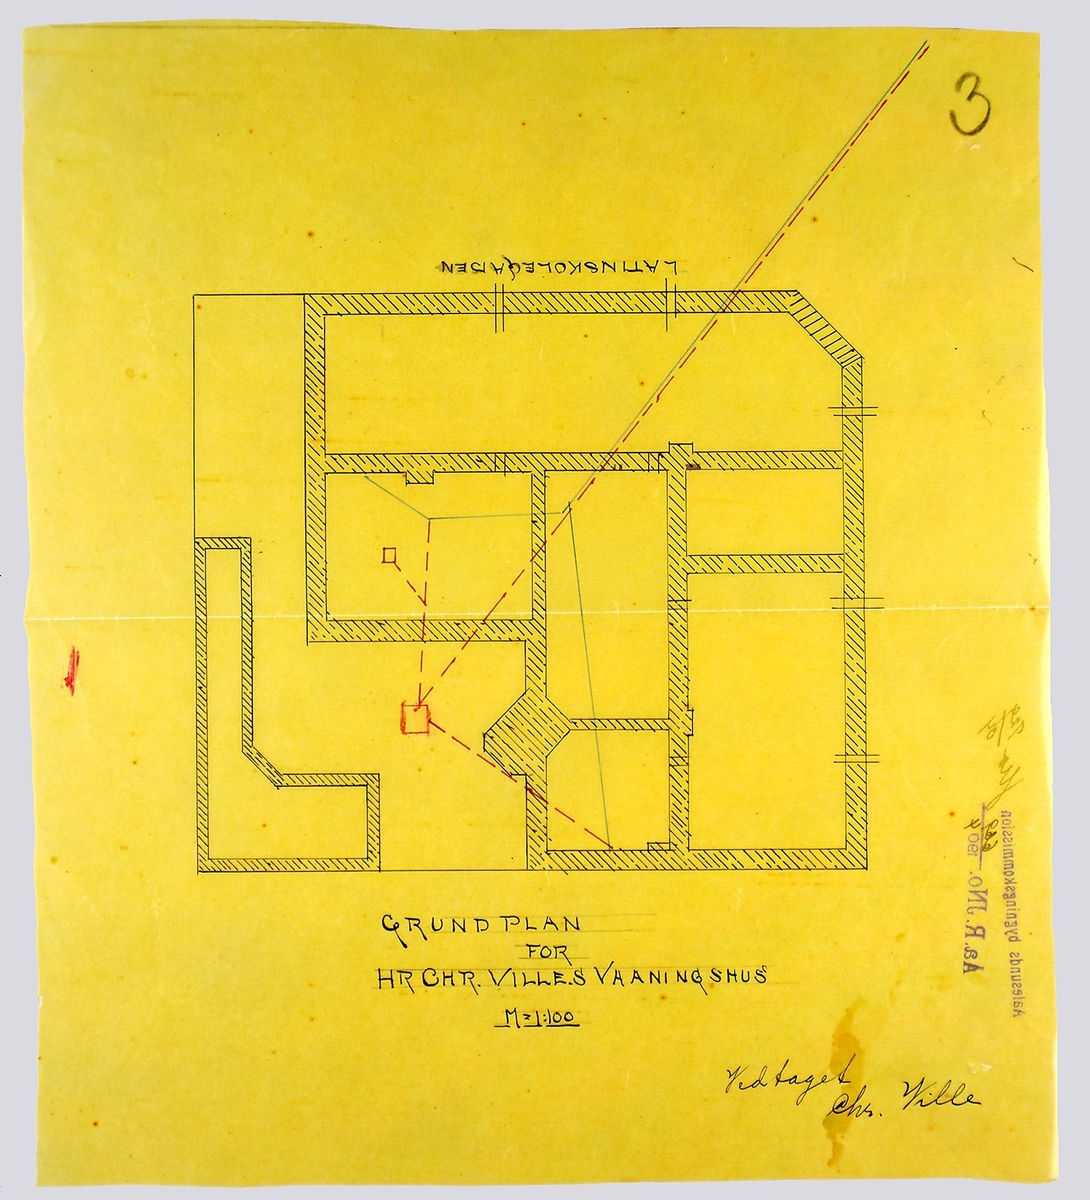 Grundplan for Hr. Chr. Ville's vaaningshus [Plantegning]